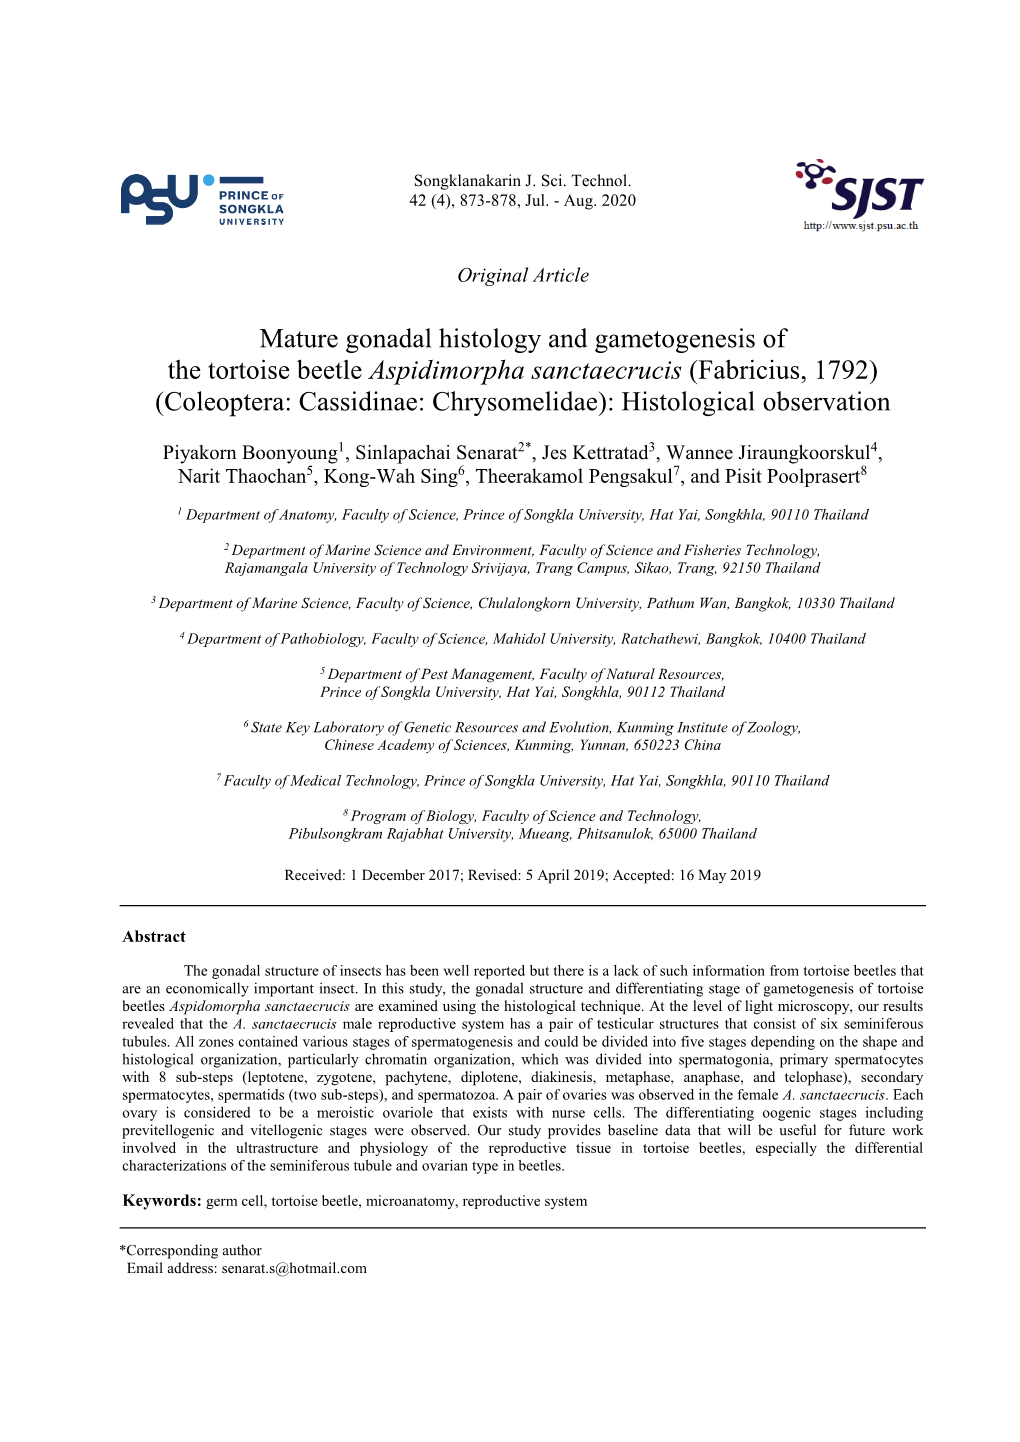 Mature Gonadal Histology and Gametogenesis of the Tortoise